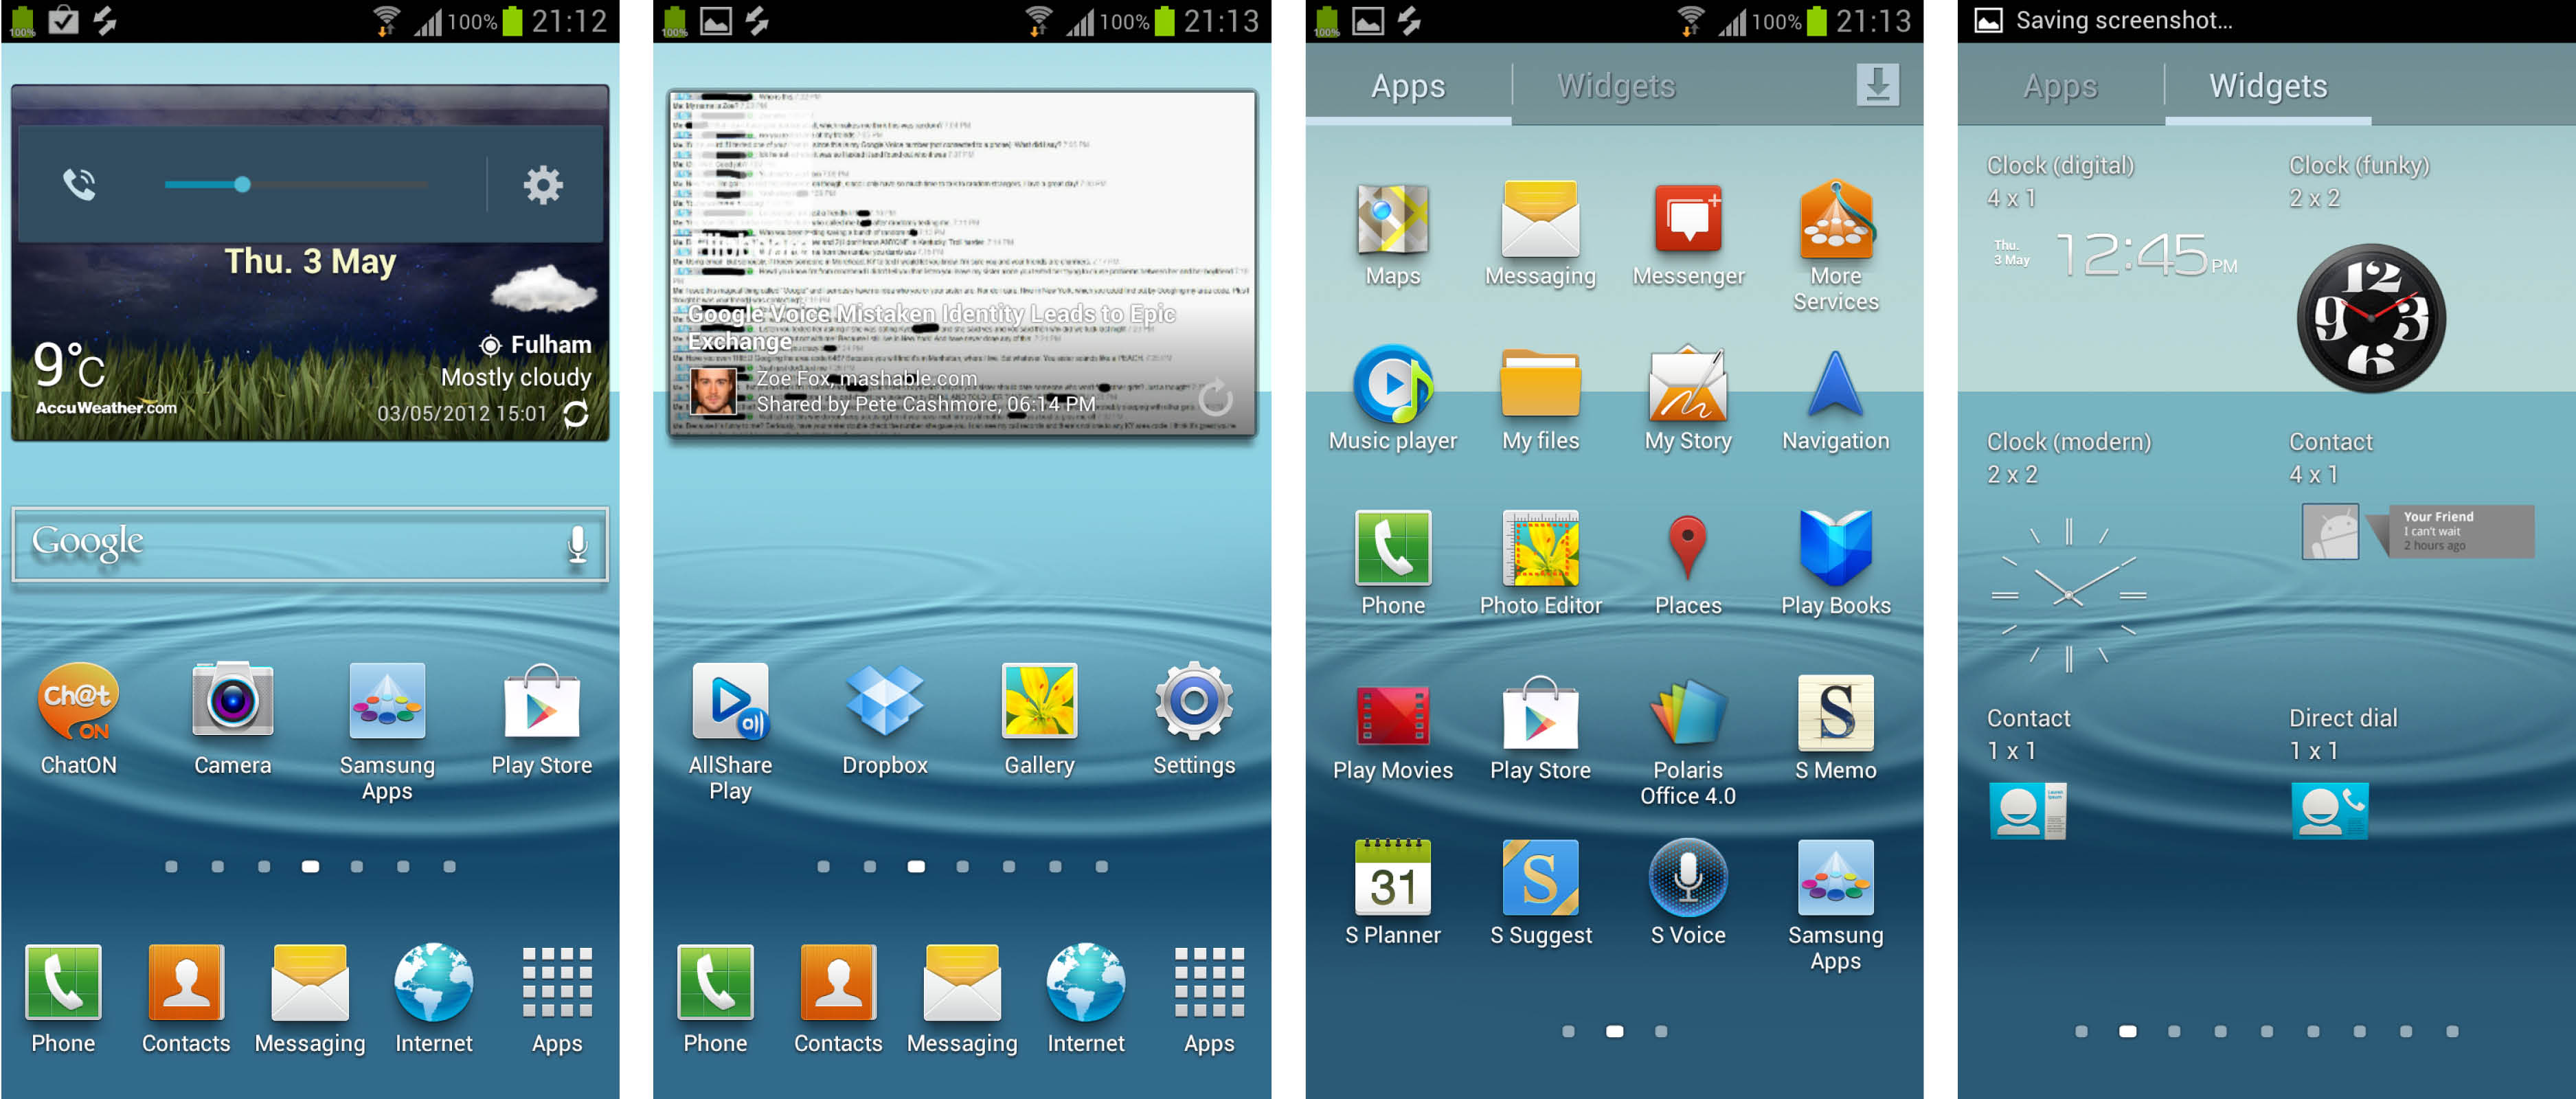 Samsung Galaxy S3 Home Screen